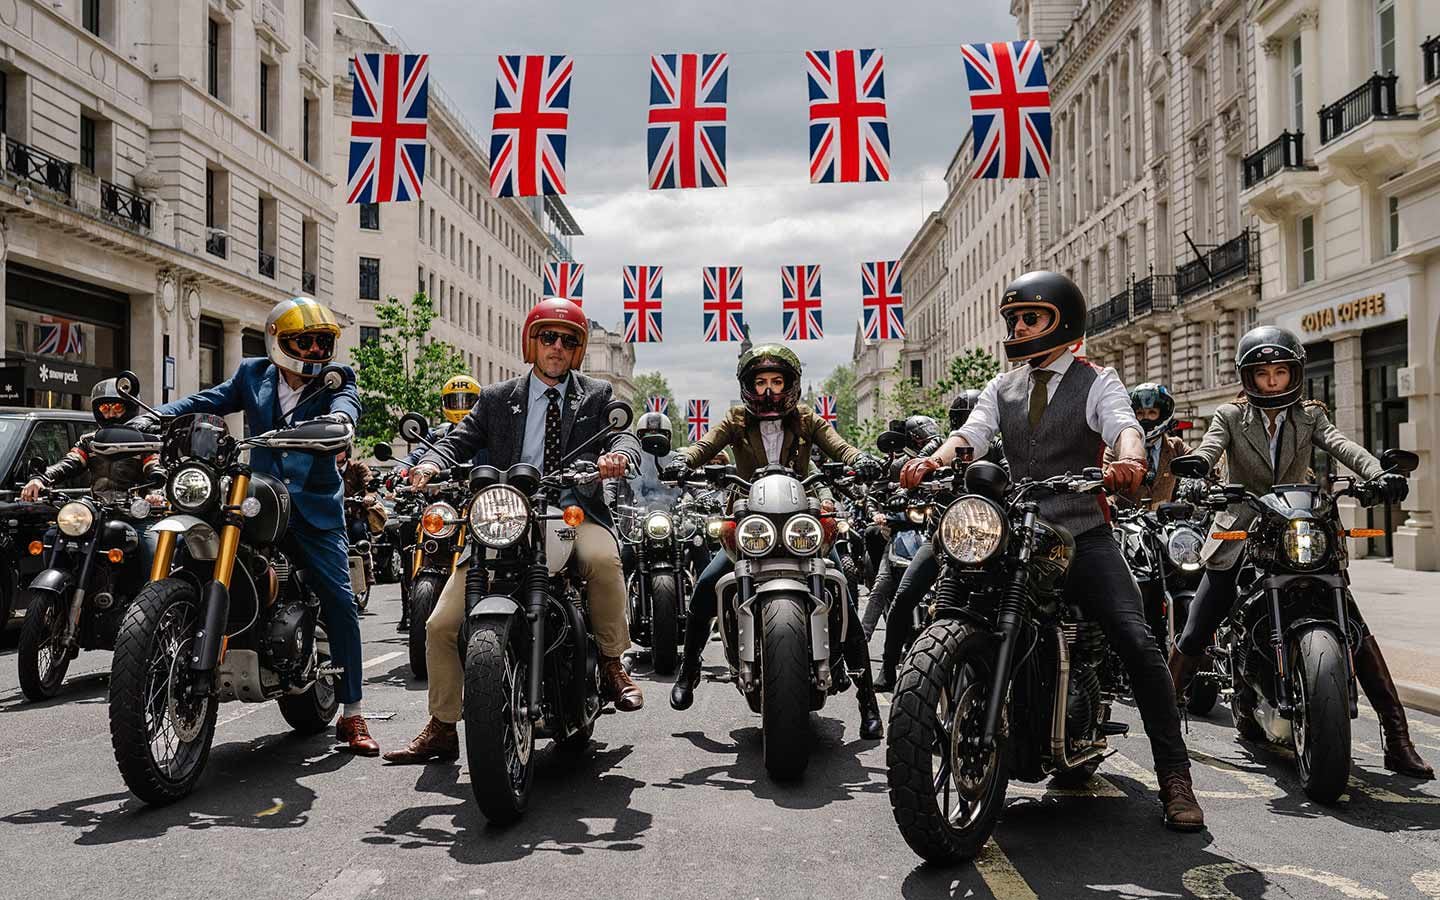 Of course, DGR happens in the UK. Distinguished gentlemen riders in London, England.